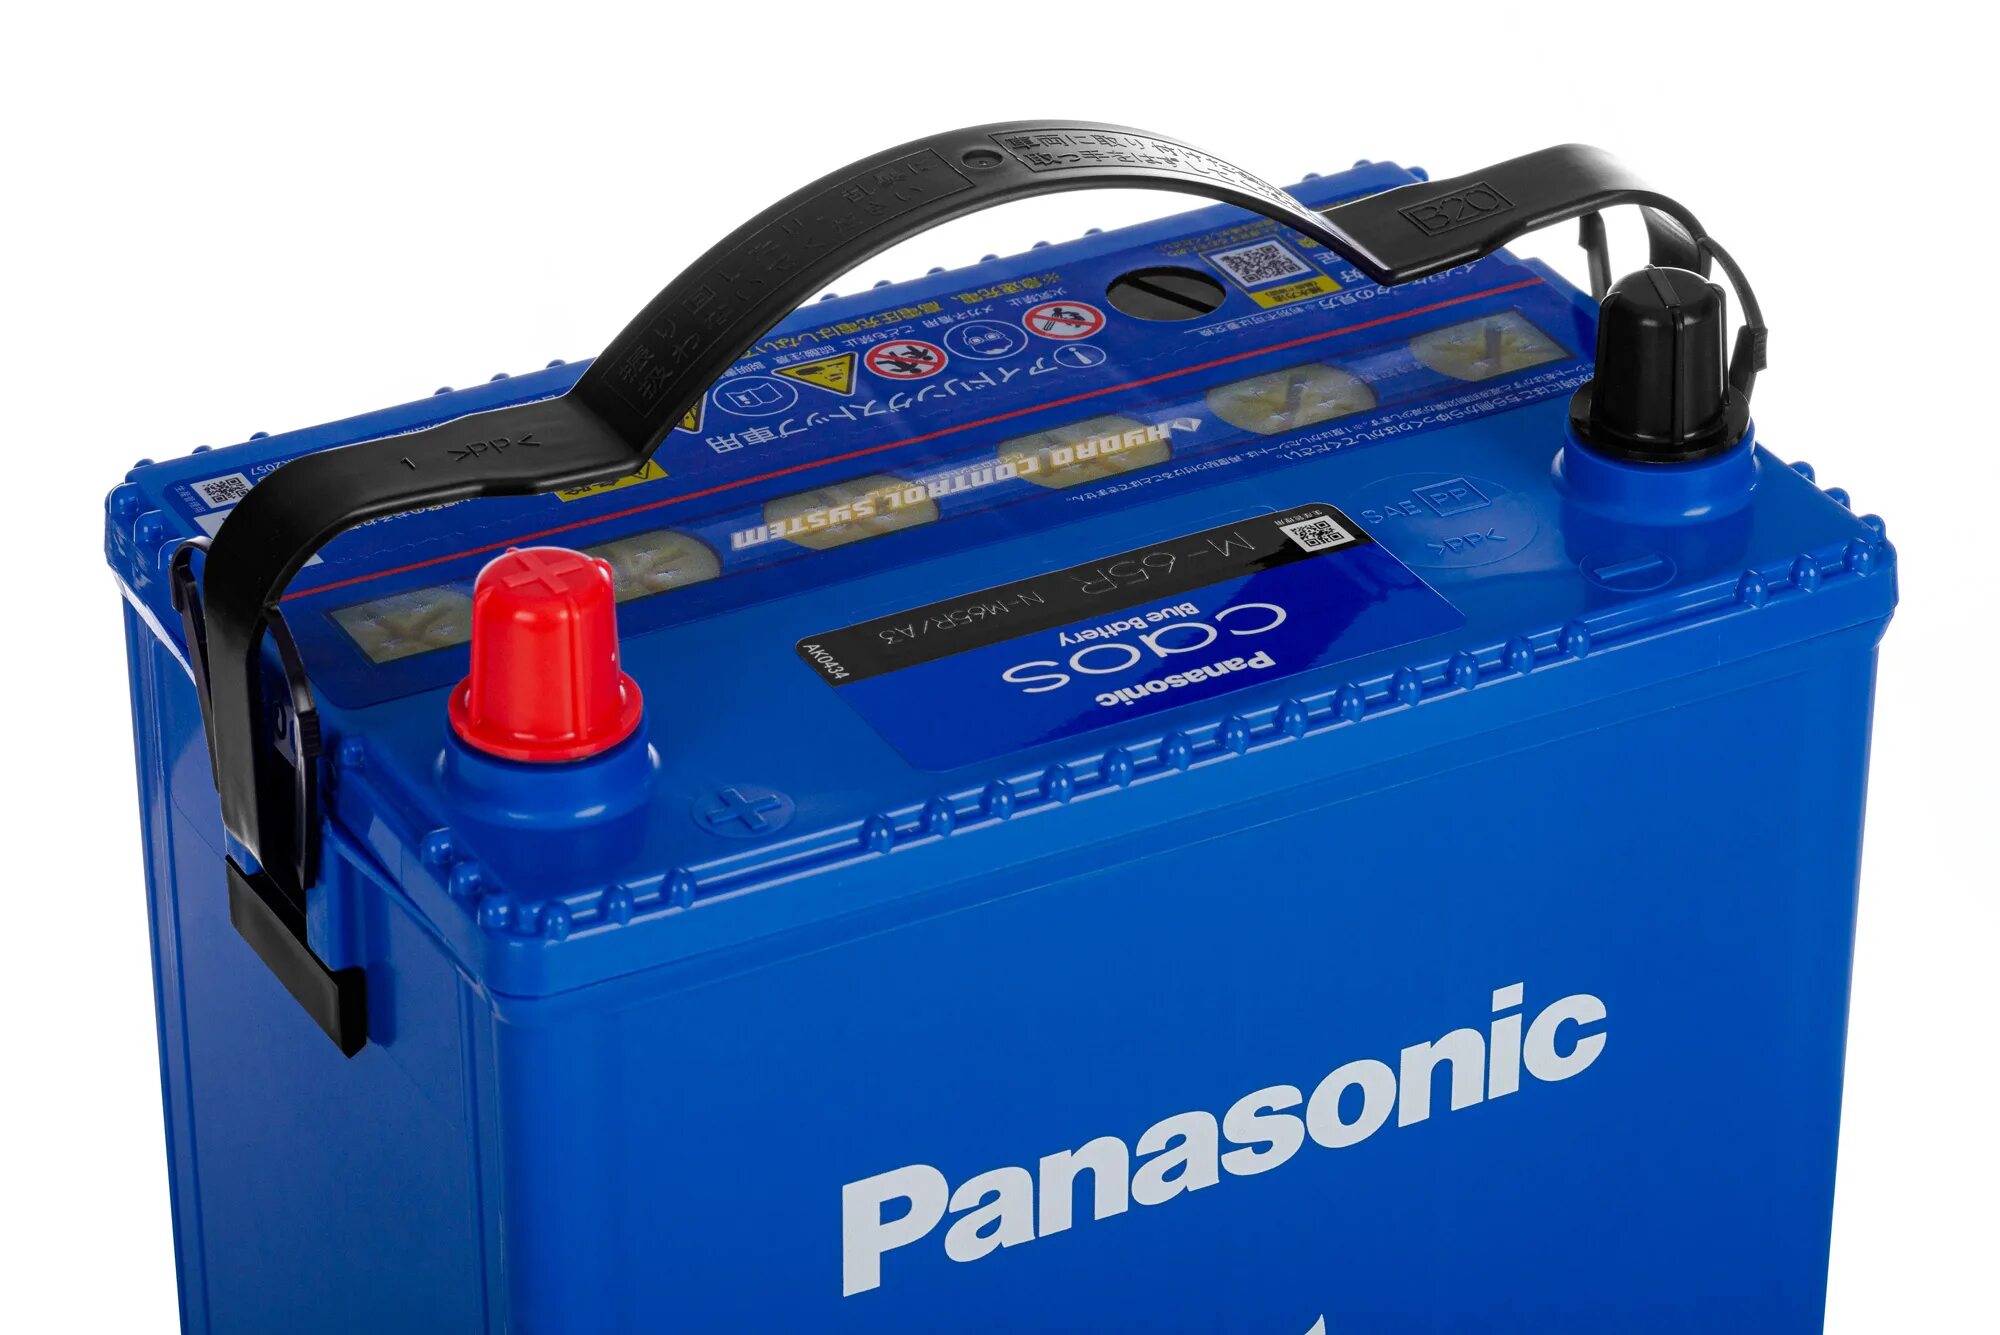 Купить аккумулятор в иваново. Аккумулятор автомобильный Panasonic caos Blue Battery n - m65/a3. Аккумулятор Панасоник для авто 65. Аккумулятор Panasonic caos Blue Battery. Аккумулятор японский 75d23l/dt2.